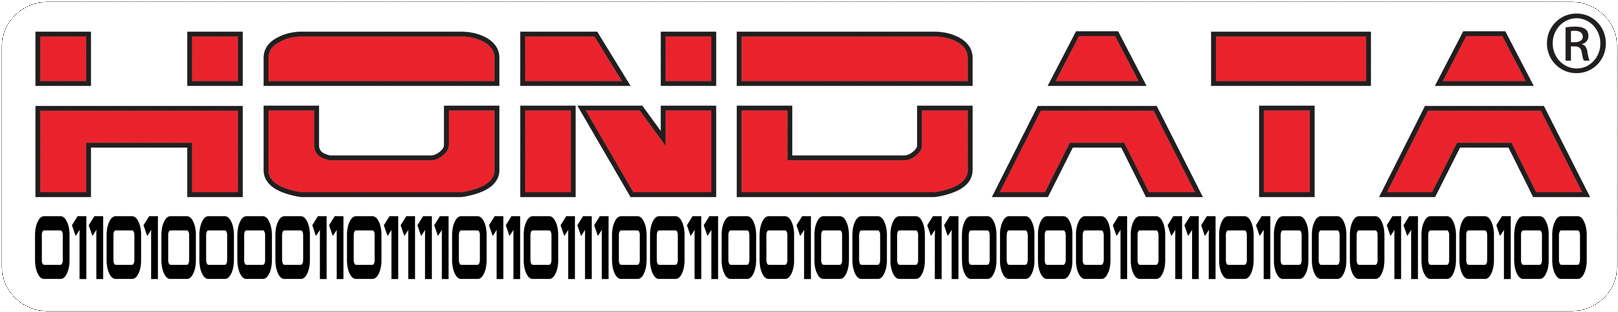 Hondata Logo - HD Hondata Releases Its Flashpro For The Honda Hondata Png